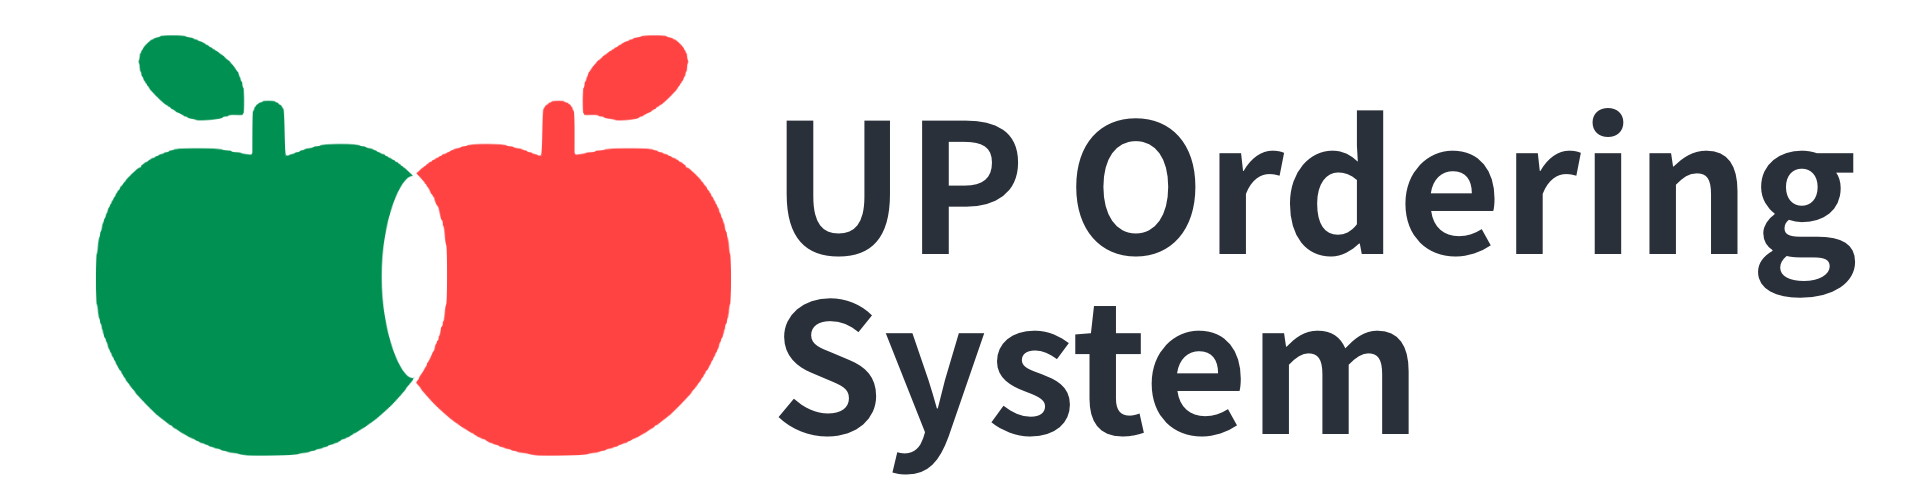 up-ordering-system|クラウド型受発注システム